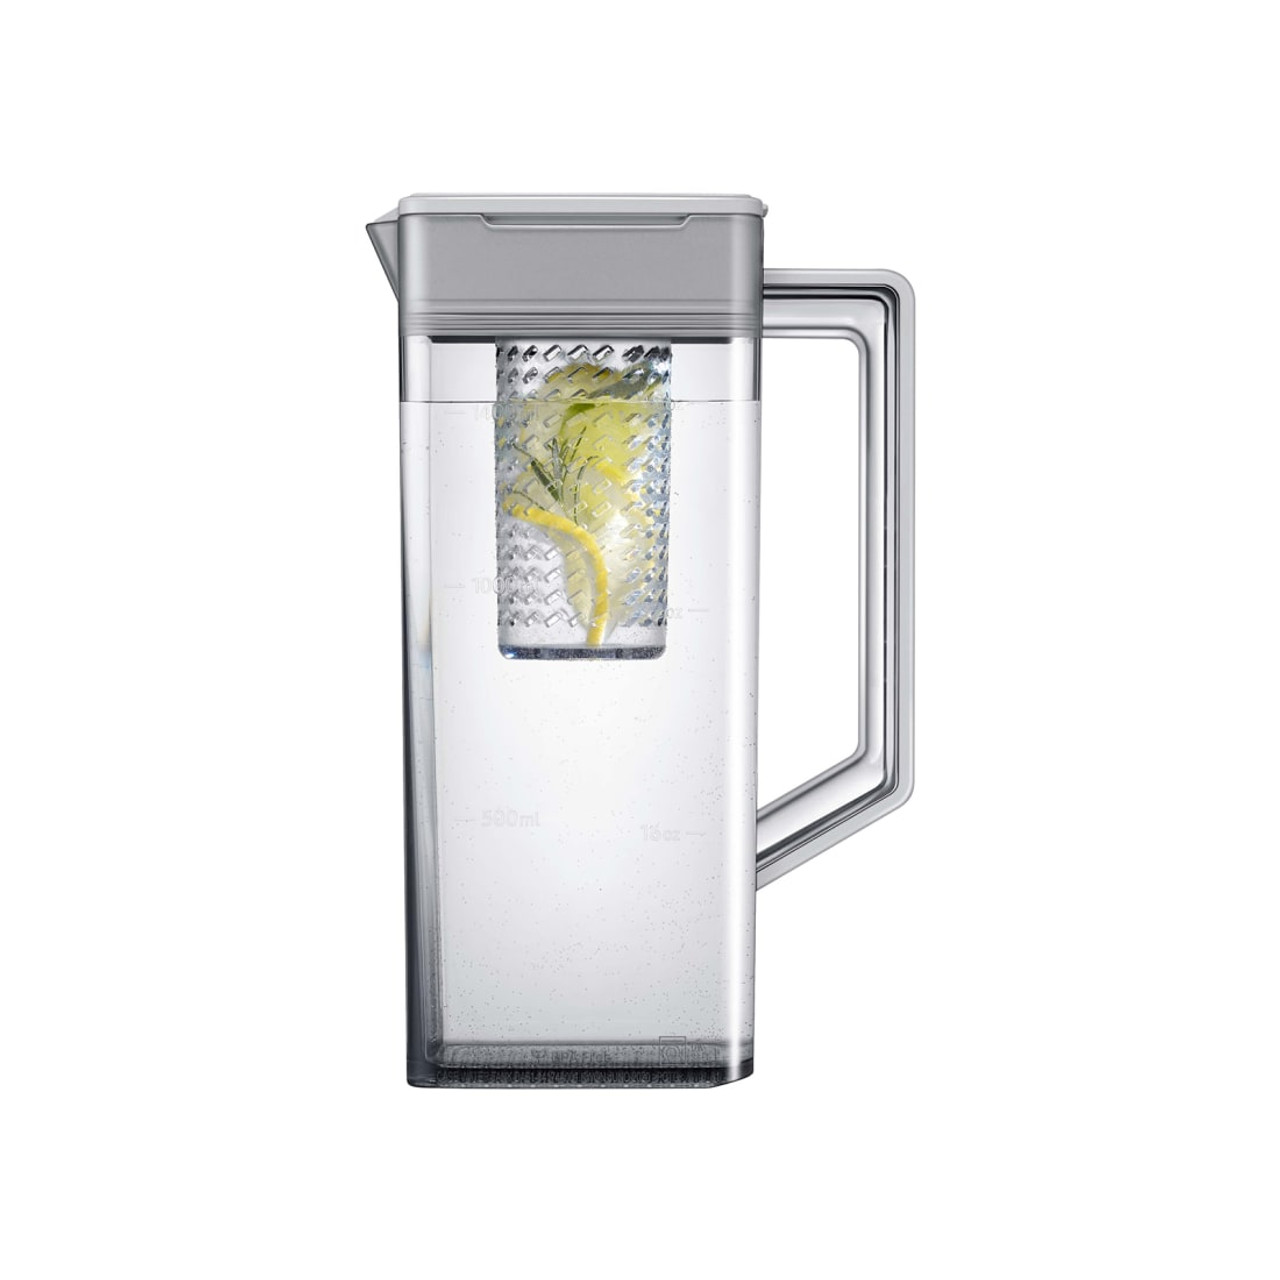 Samsung Bespoke Counter Depth 4-Door French Door Refrigerator (23 cu. ft.) with Family Hub White Glass - RF23BB890012